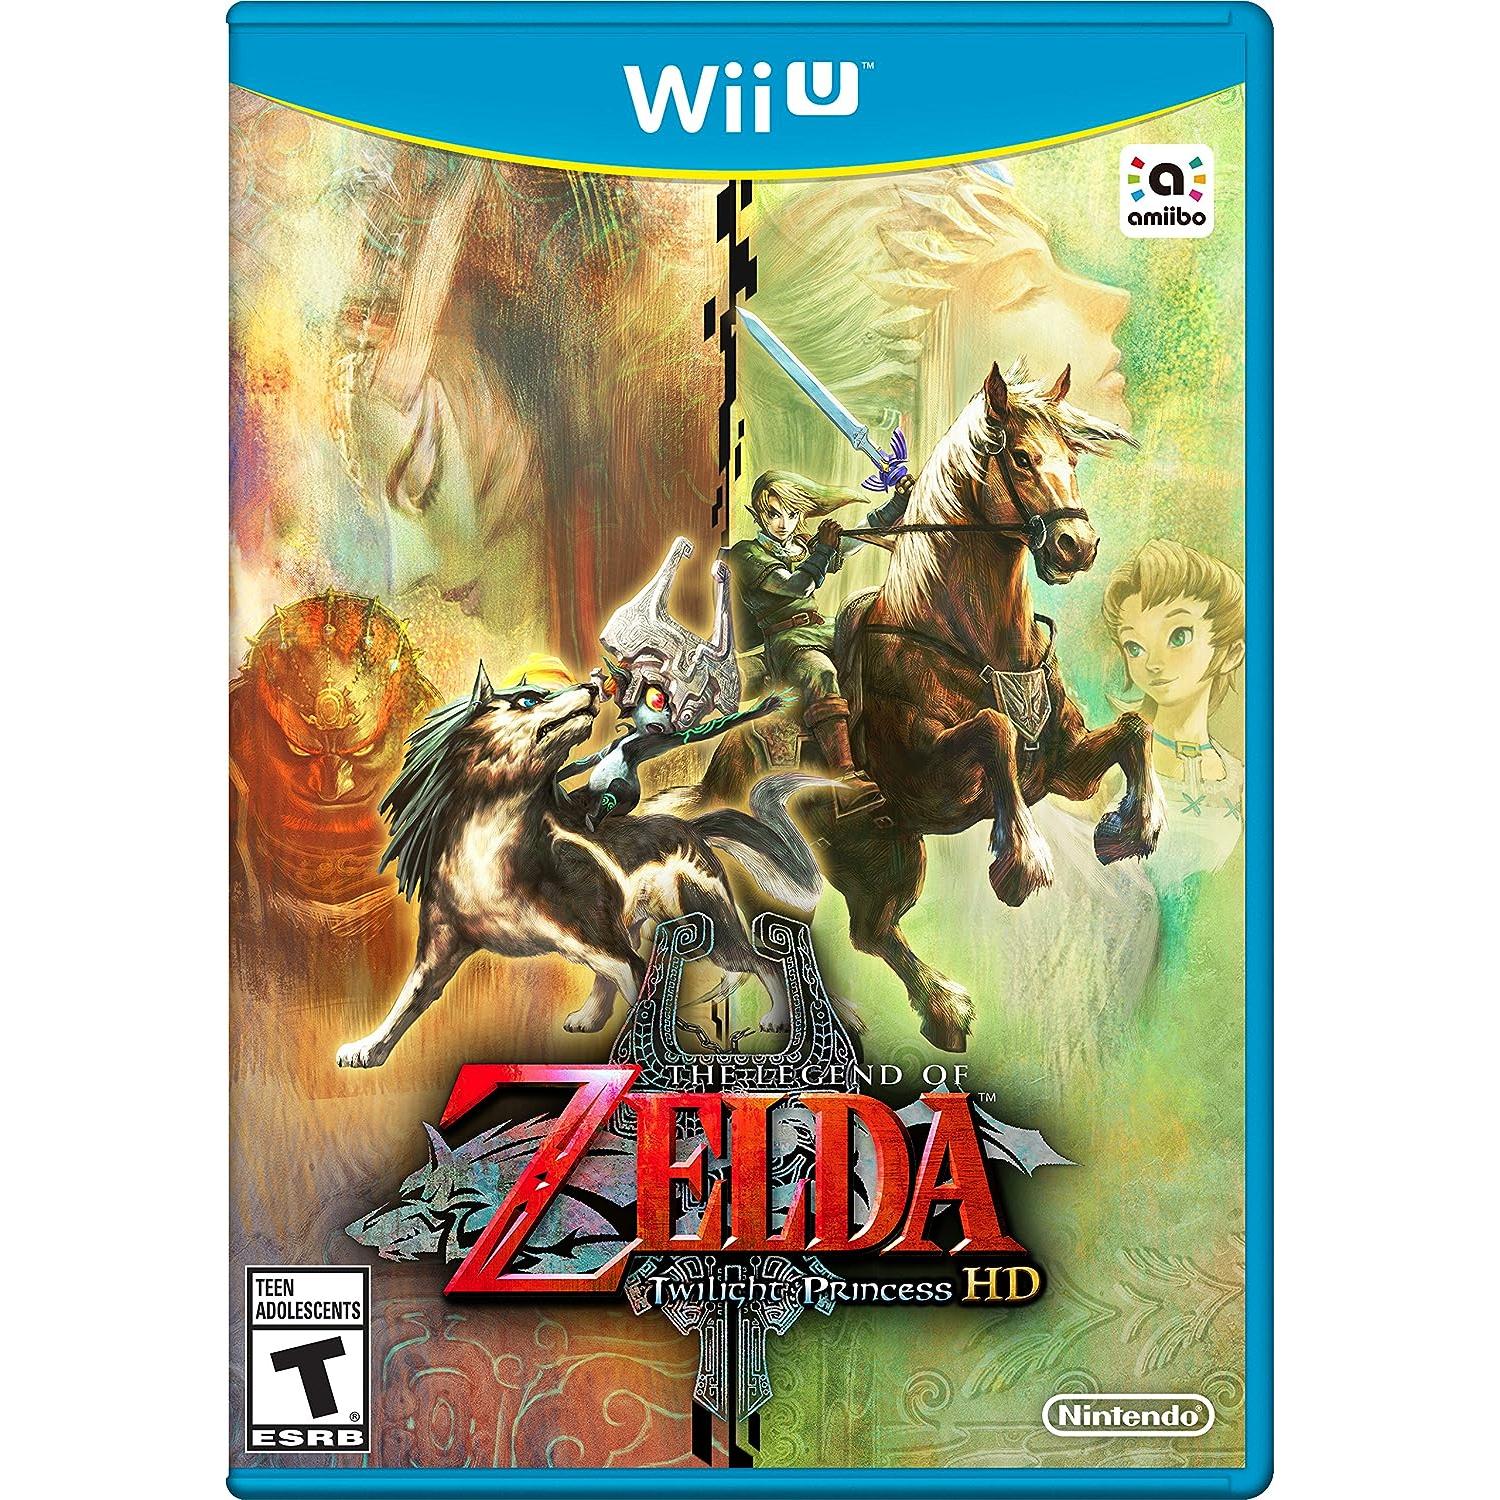 WII U - The Legend of Zelda Twilight Princess HD + Wolf Link Amiibo (Sealed)